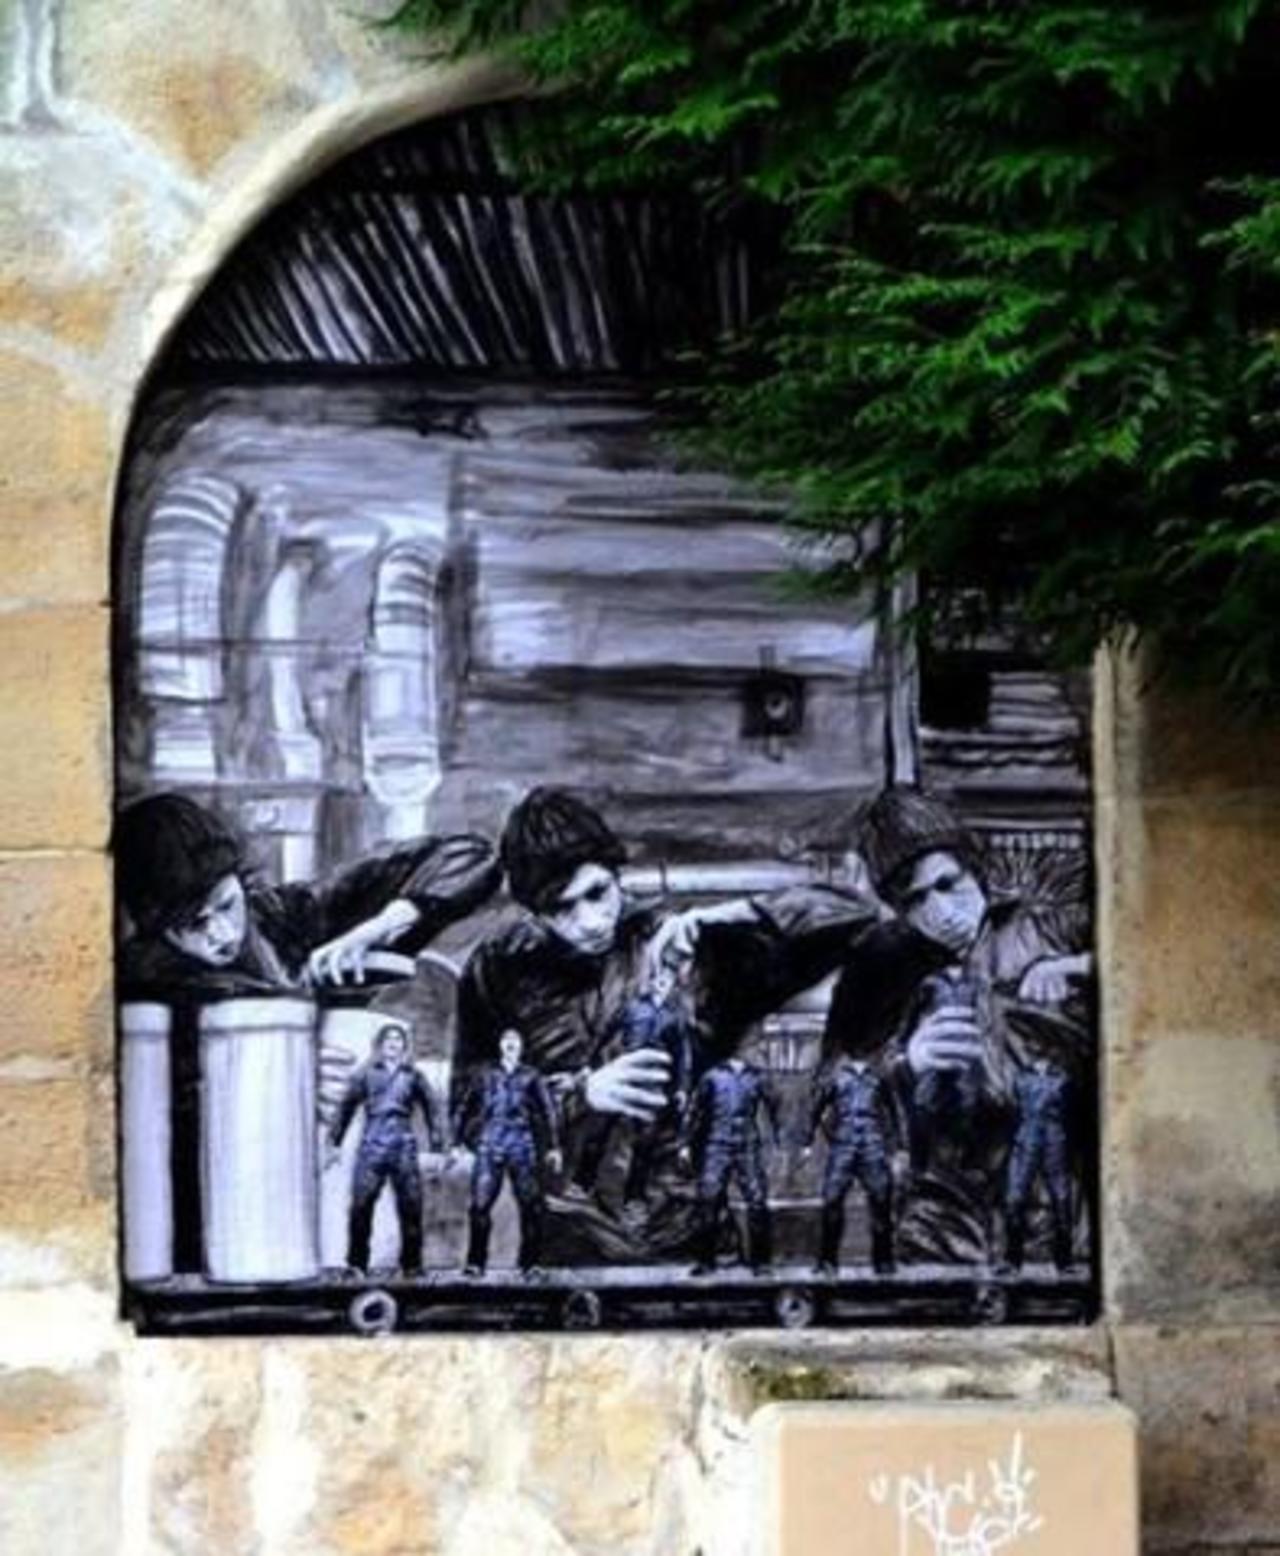 Paris V, 2014 
by #Levalet (1988-....)
#streetart #graffiti #Art http://t.co/2ZegD1qlZR